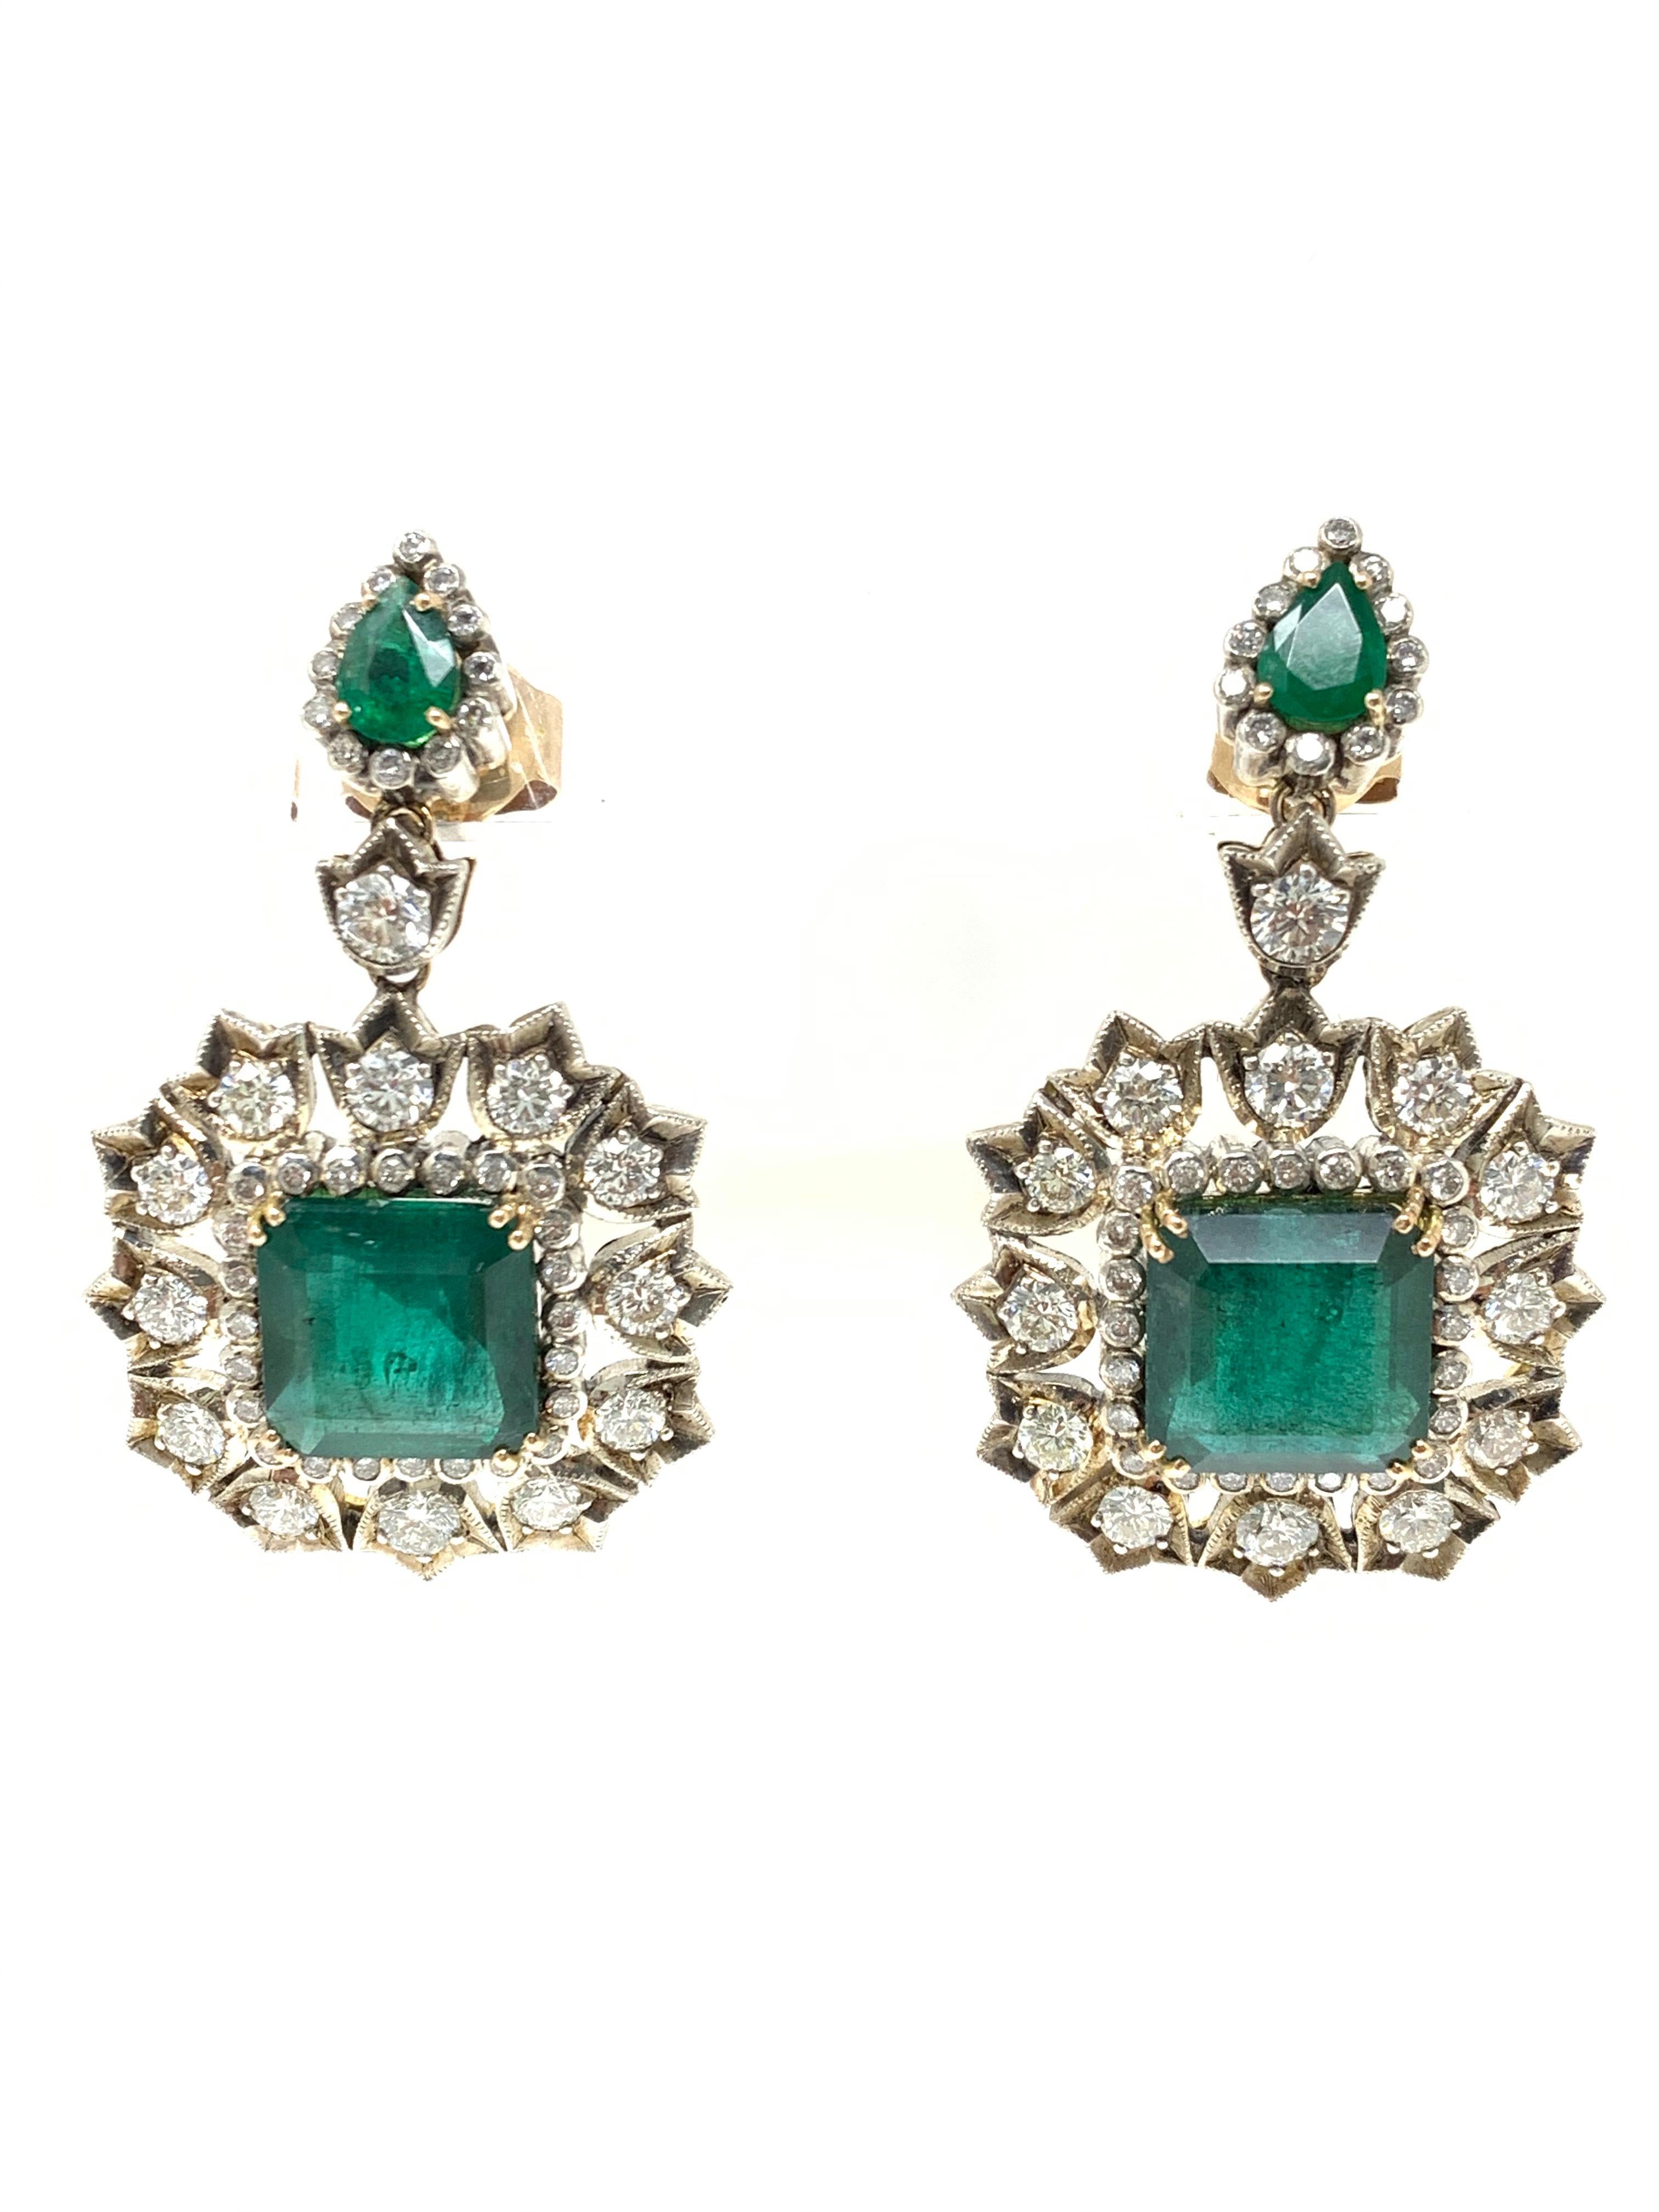 Emerald and Diamond Earrings in 18 Karat White Gold 1